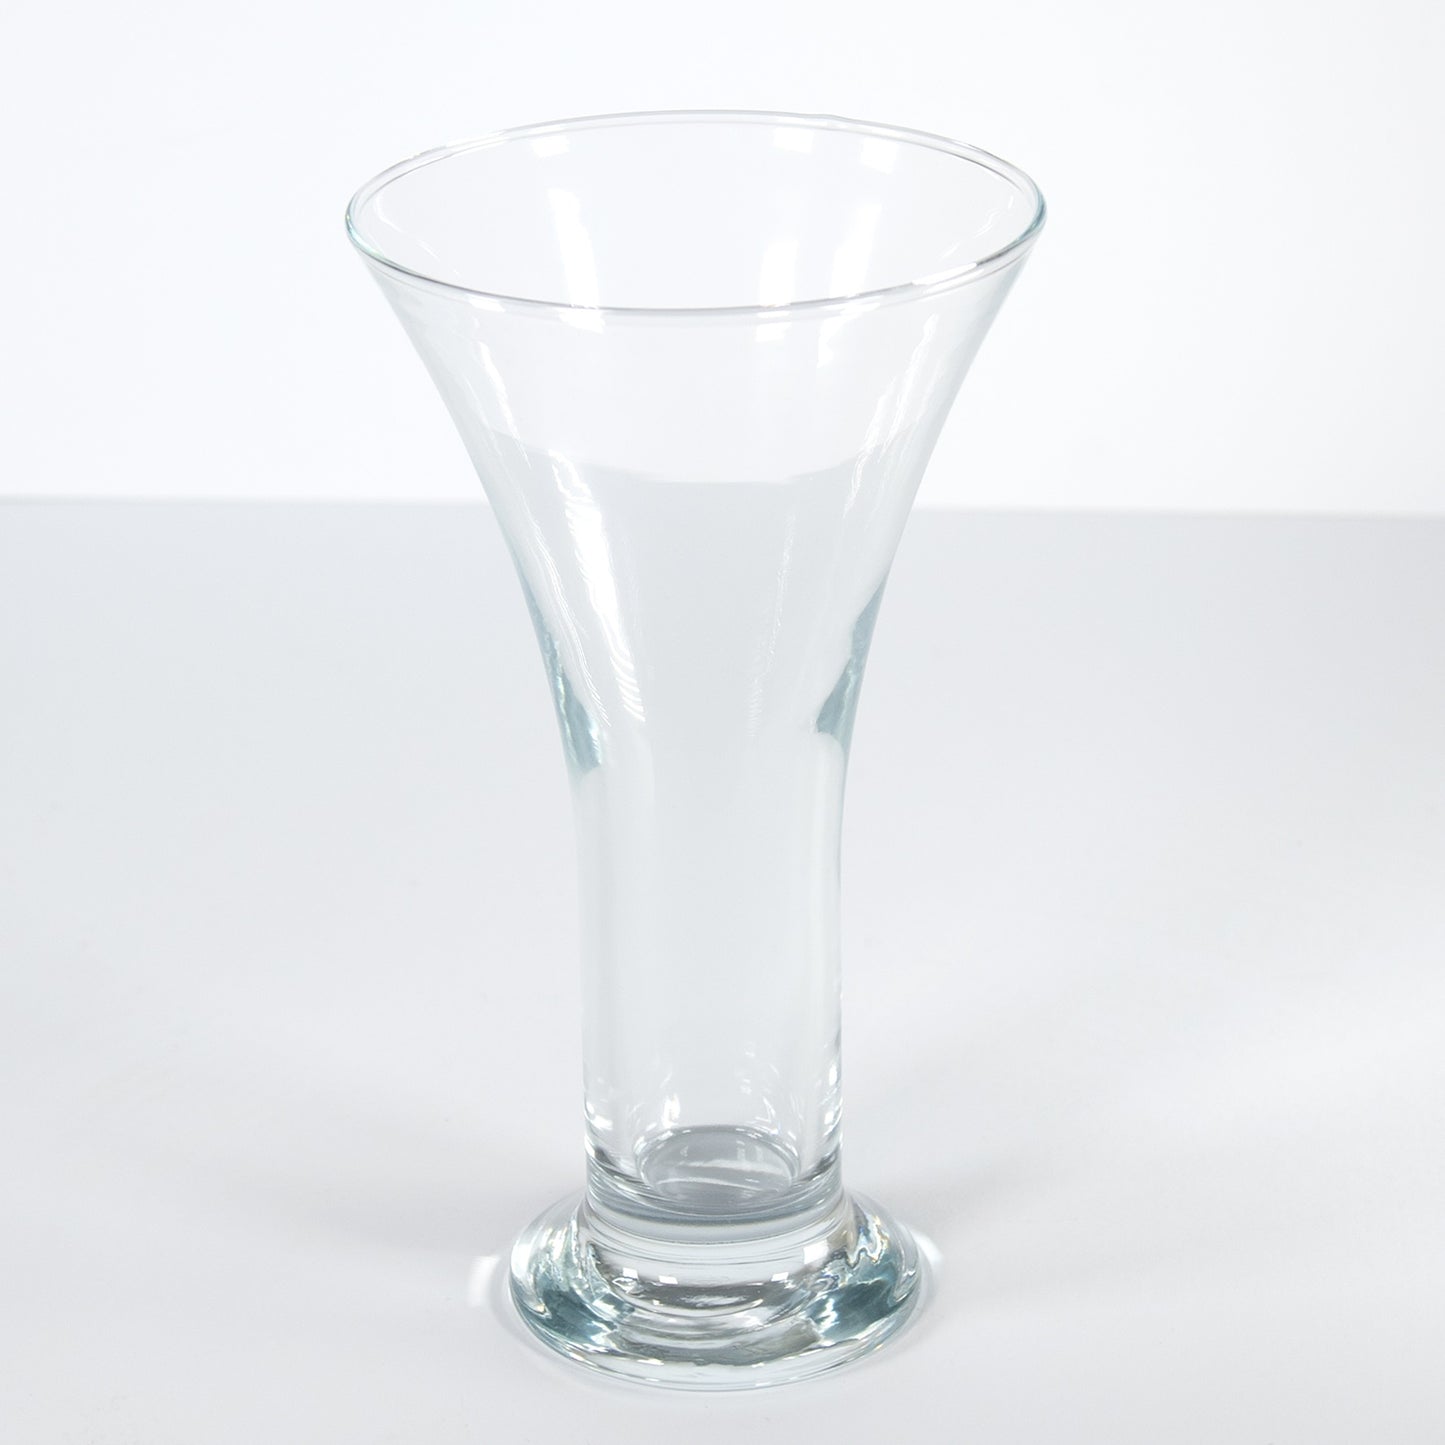 27cm Tall Tumpet Shape Glass Vase